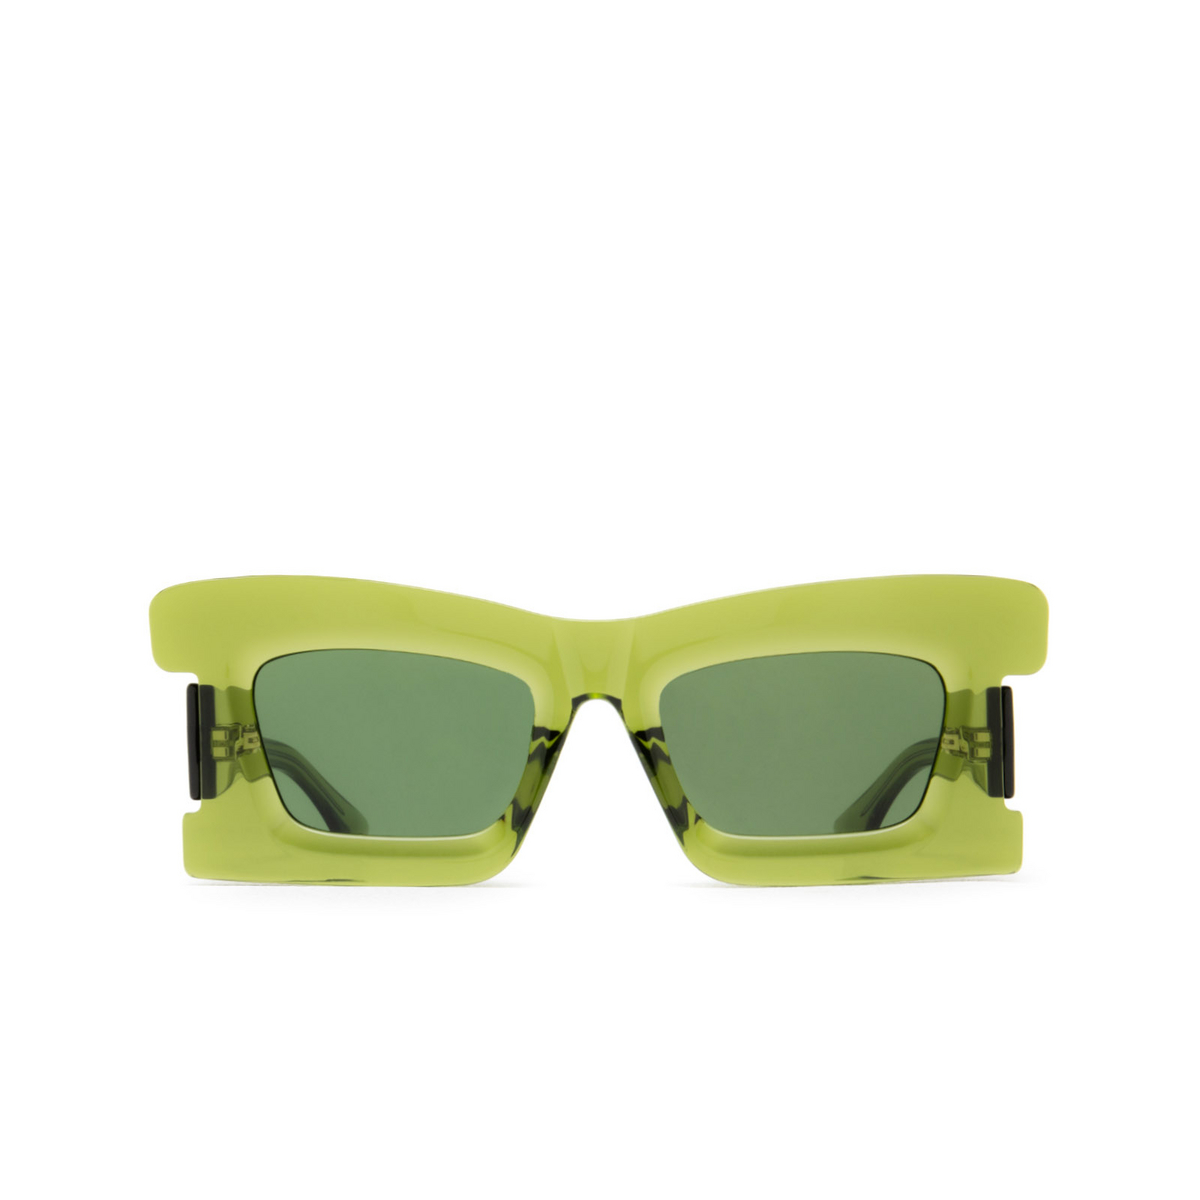 Kuboraum R2 Sunglasses GRE Green - front view